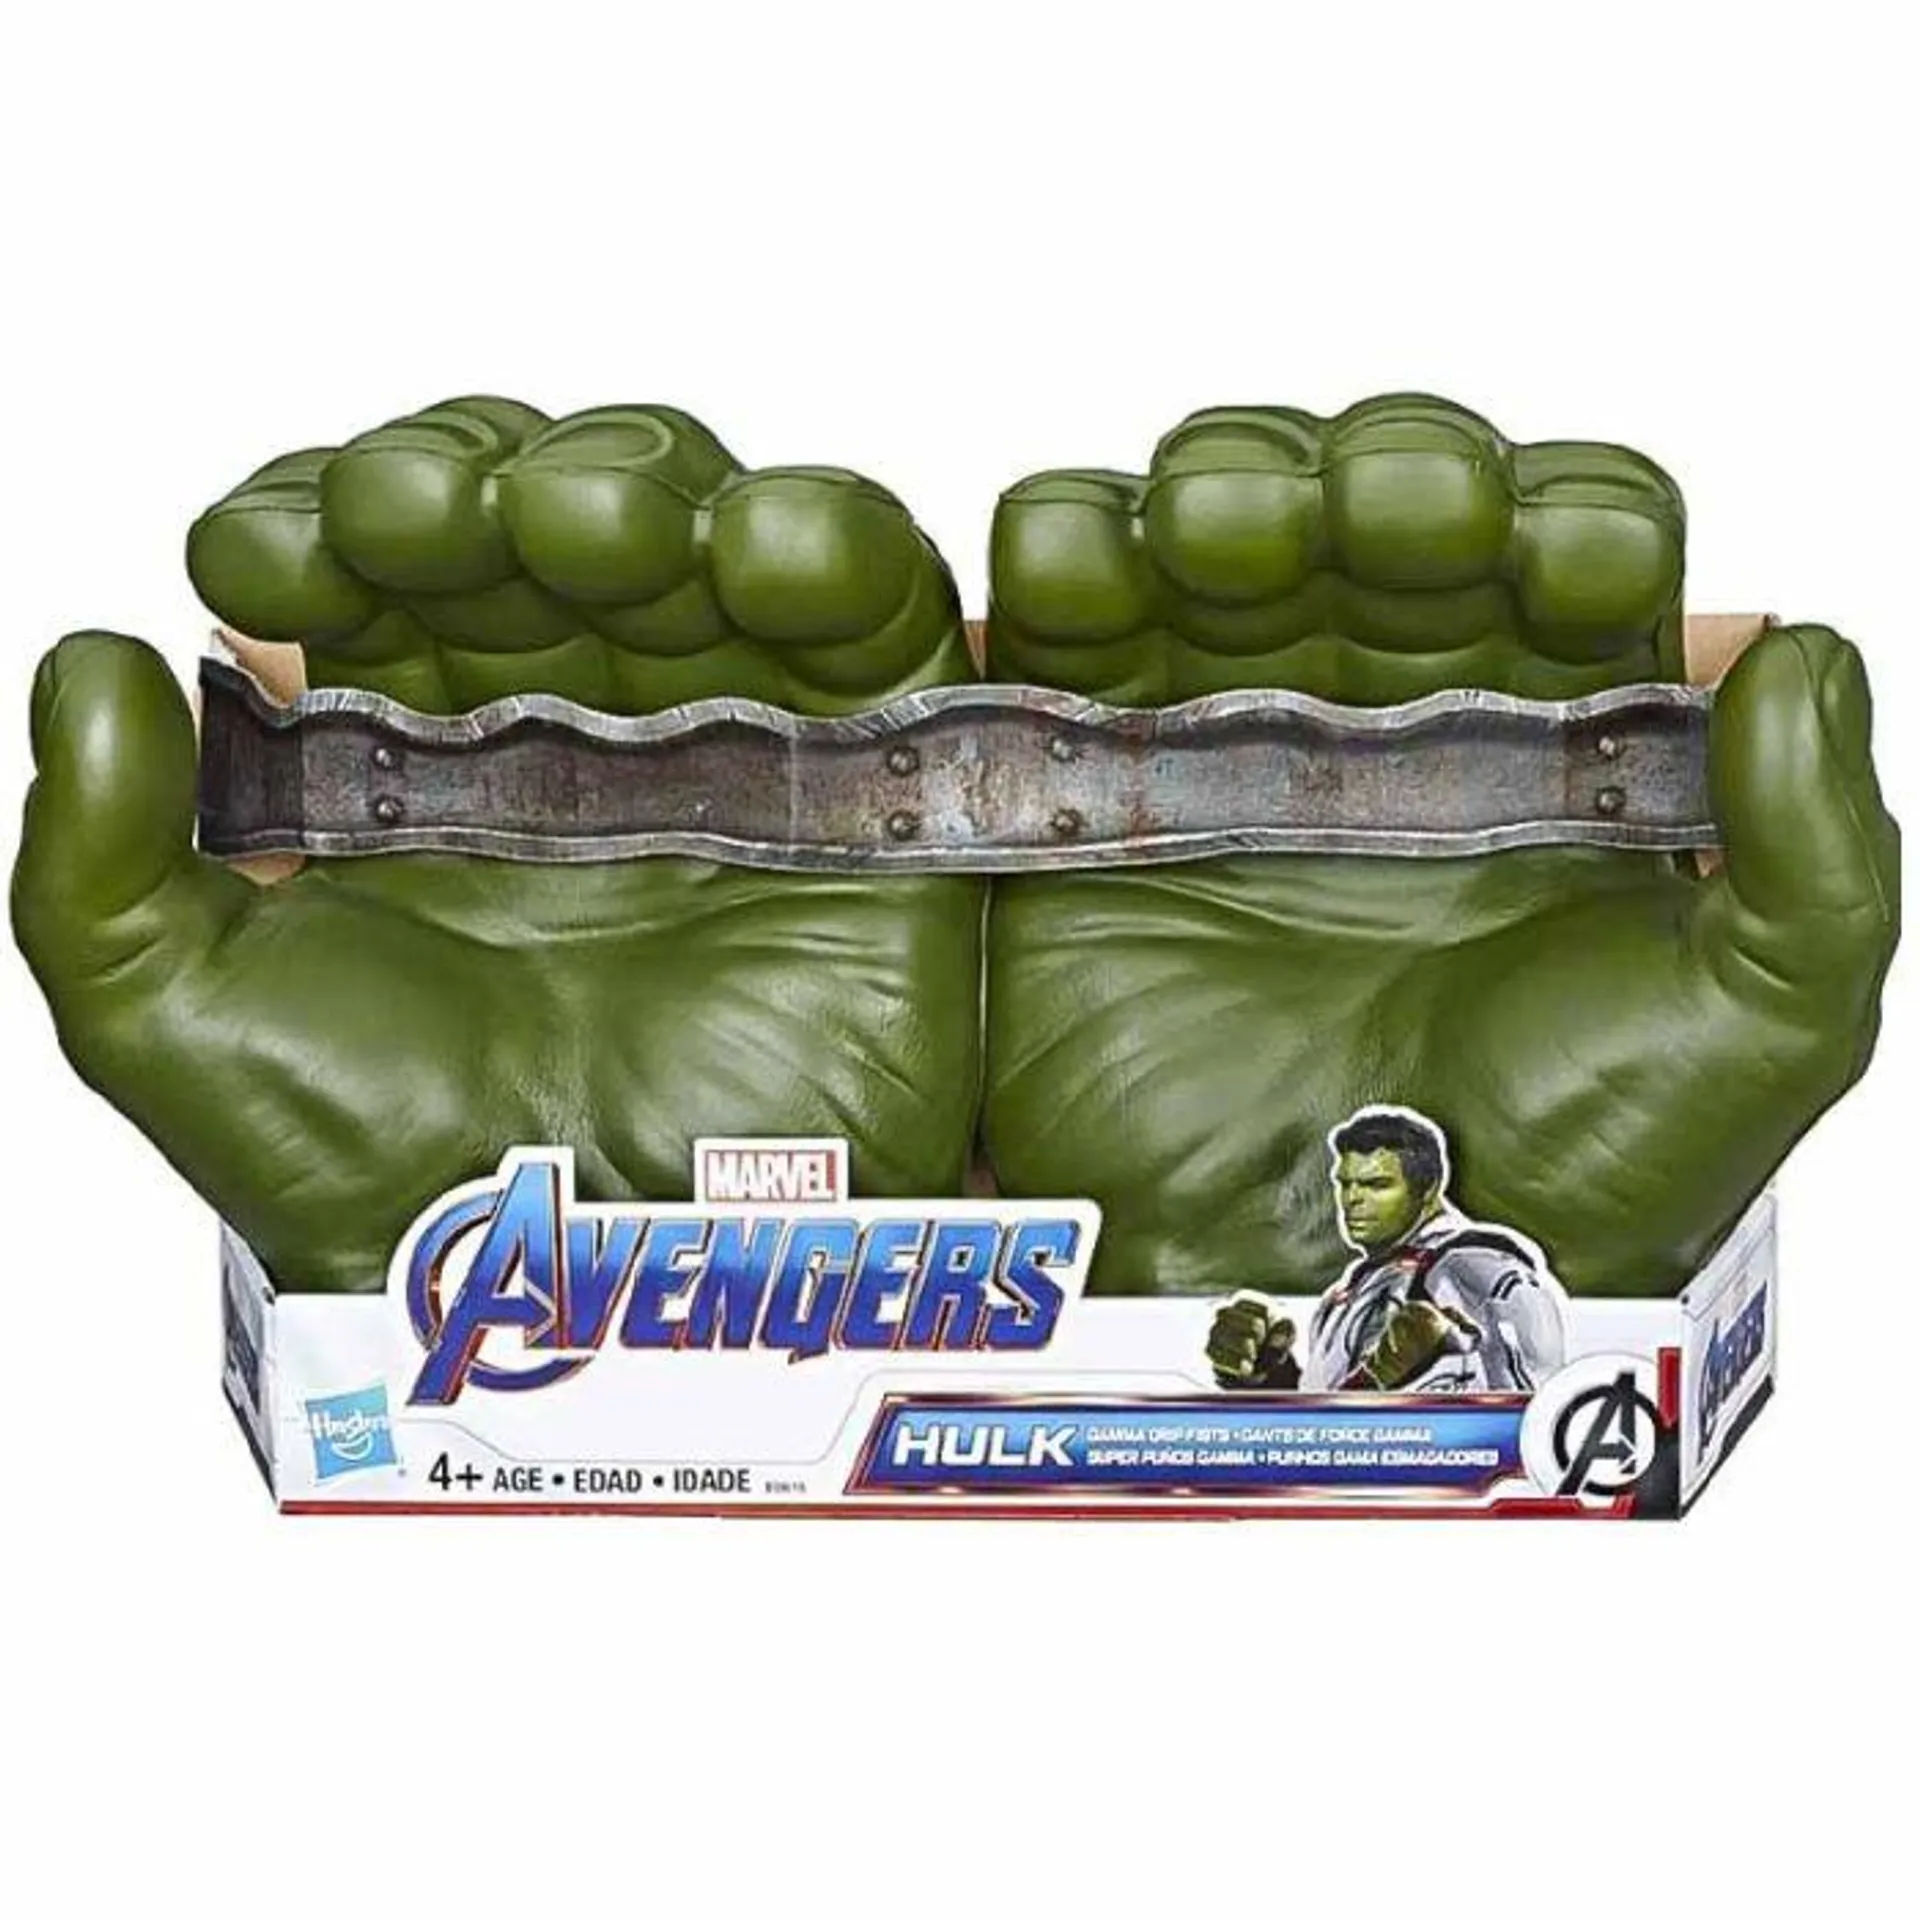 Super punhos gamma do Hulk